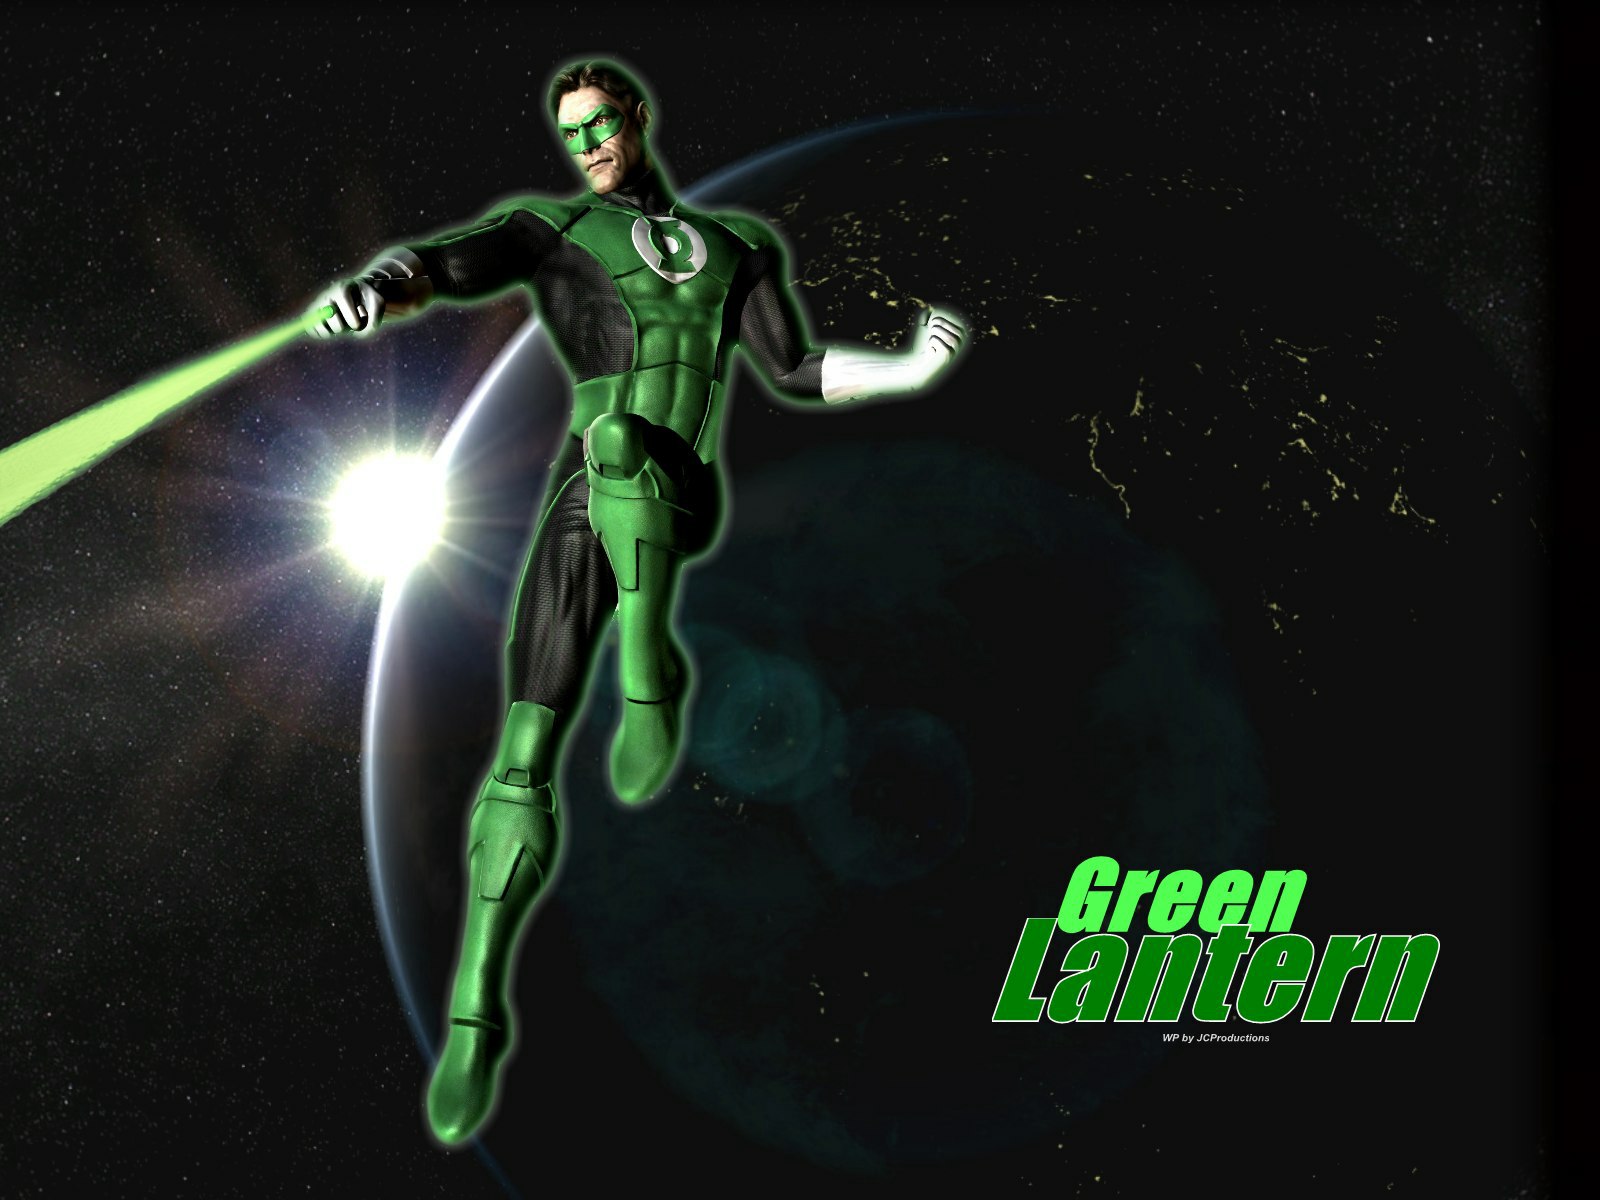 Green Lantern Image HD Wallpaper And